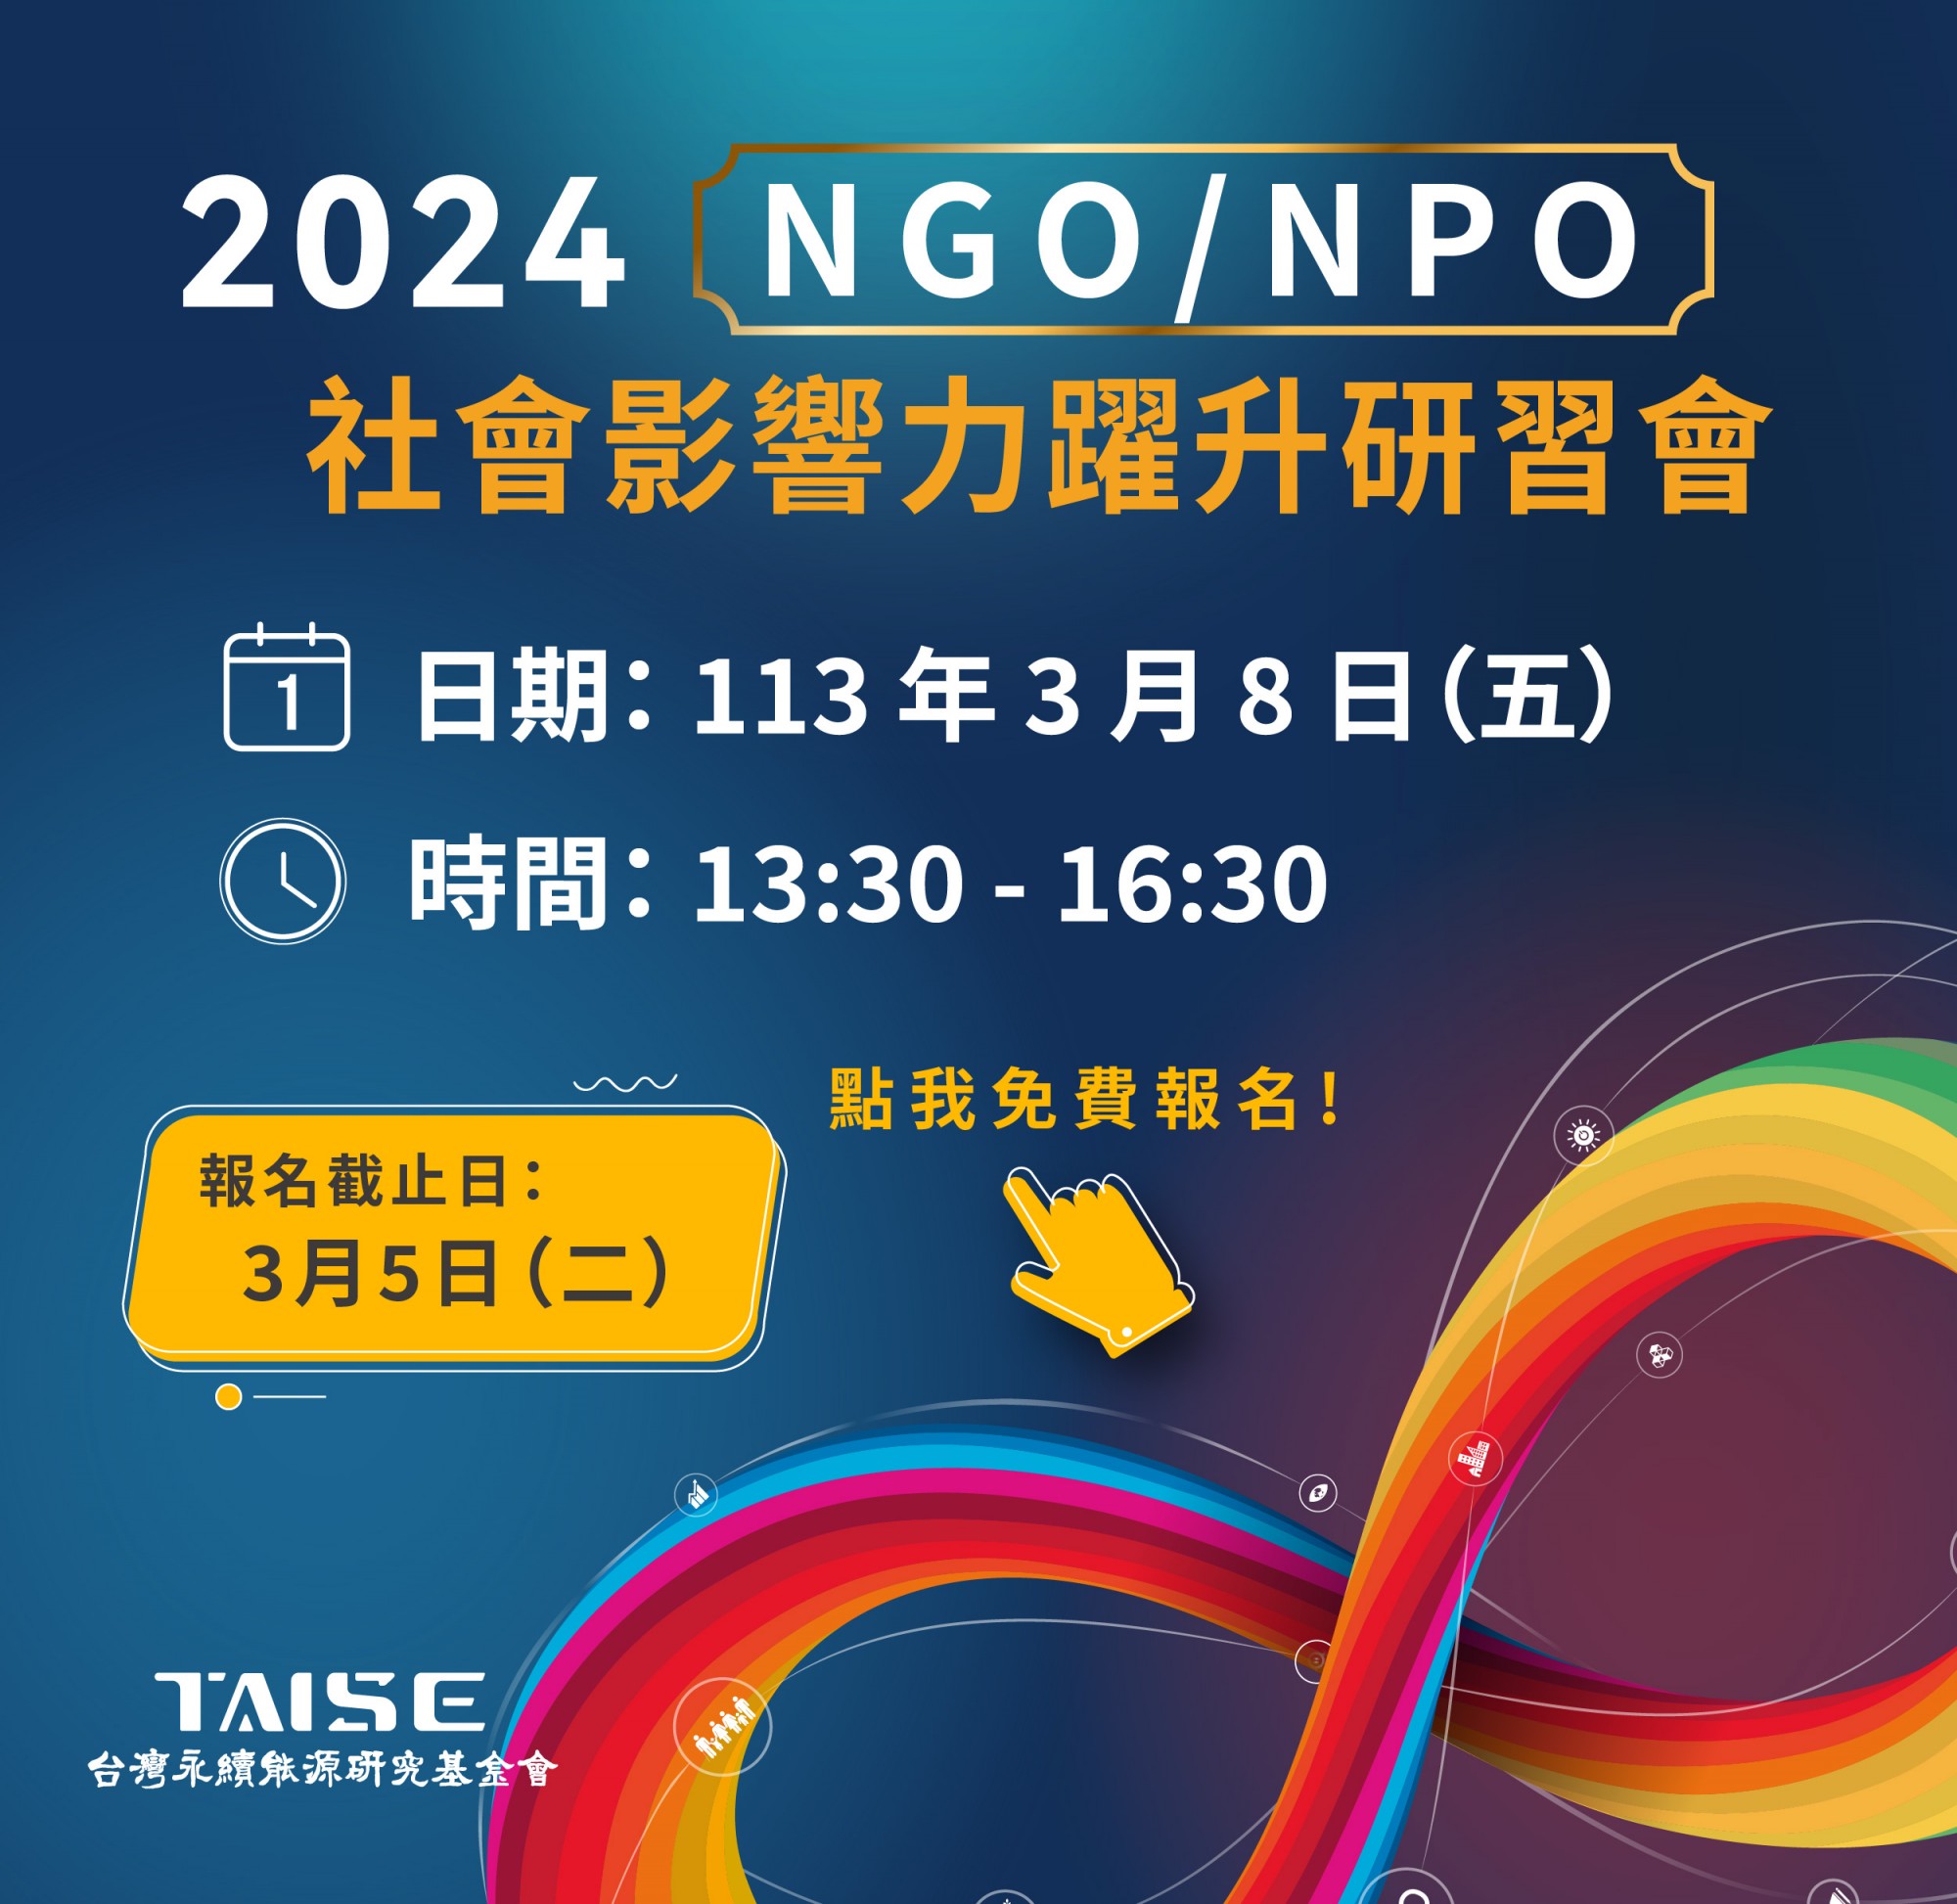 2024 NGO/NPO社會影響力躍升研習會